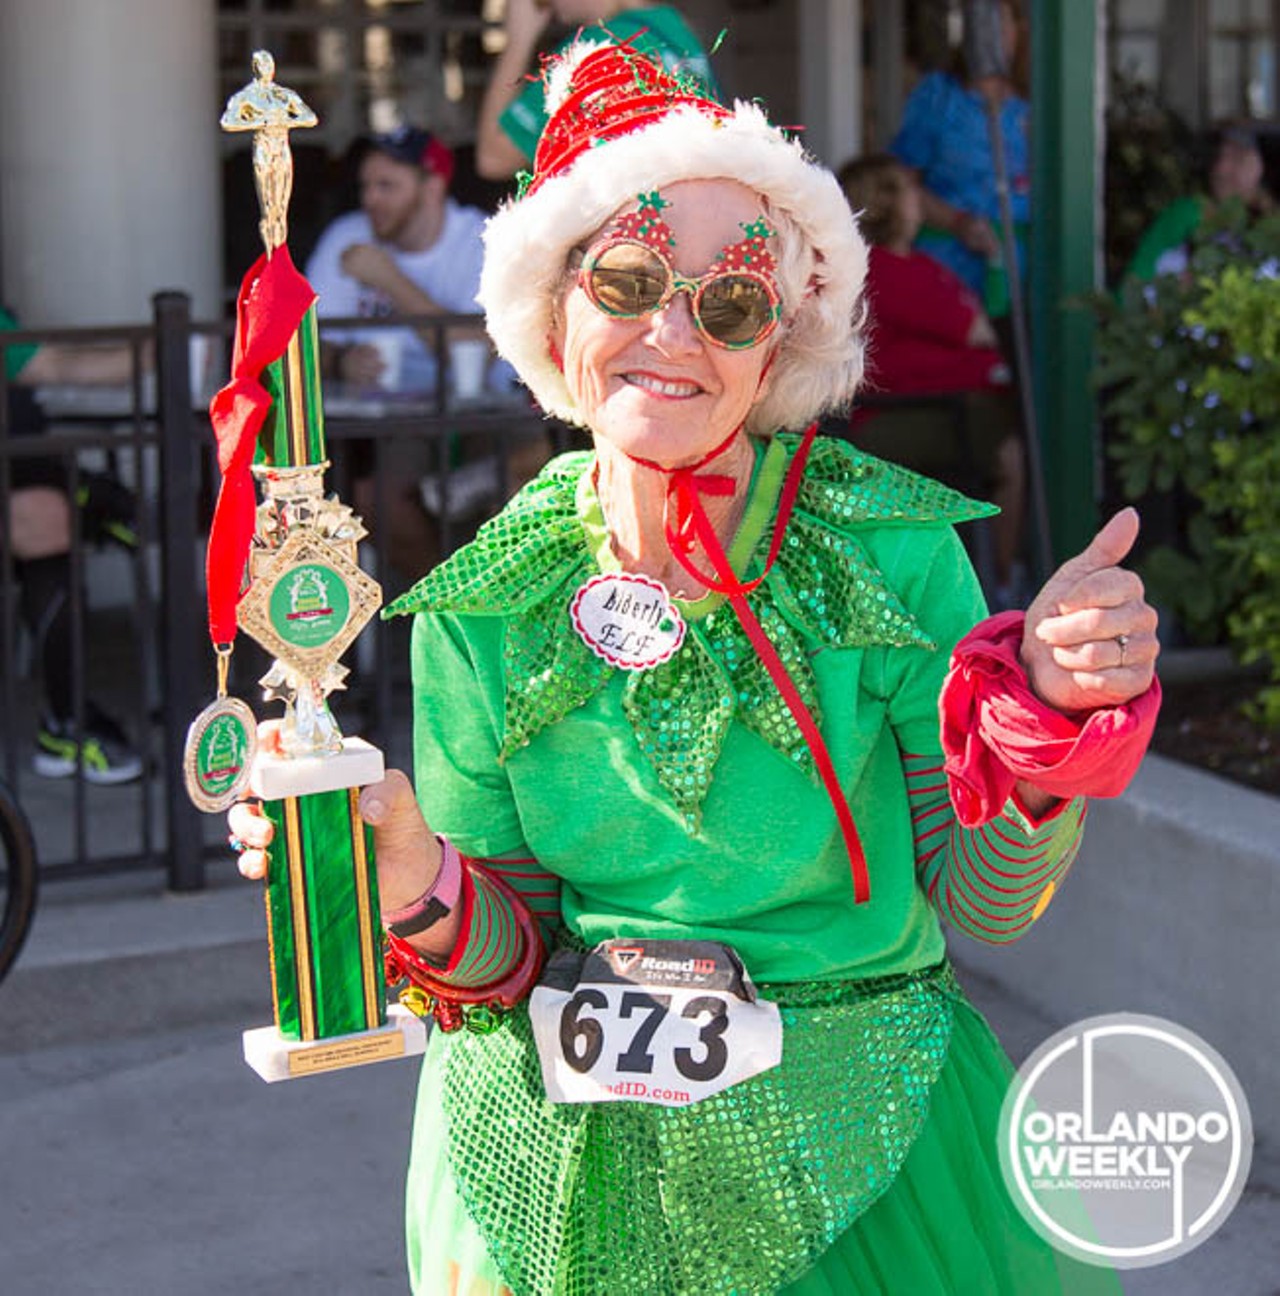 32 merry photos from the Jingle Bell Run/Walk for Arthritis